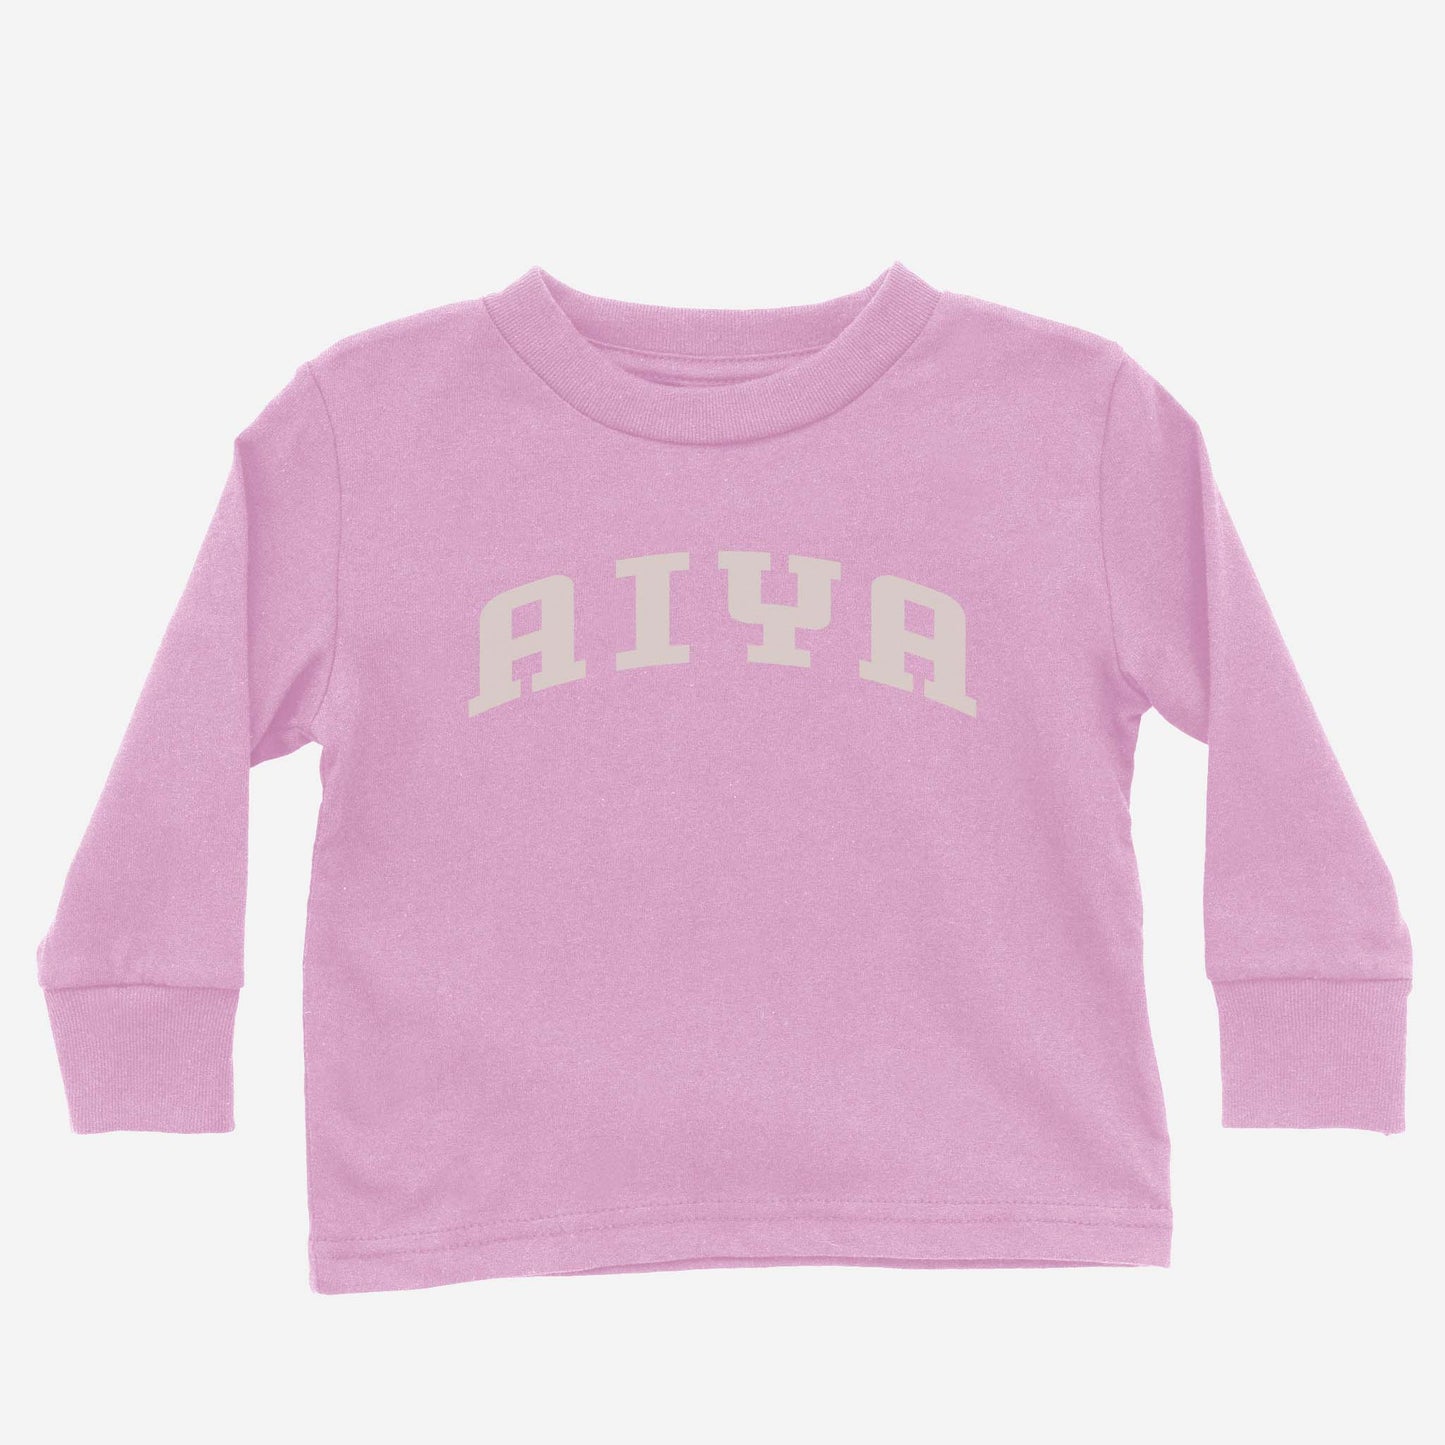 Aiya Toddler Long Sleeve Shirt pink - Asian Baby Clothing